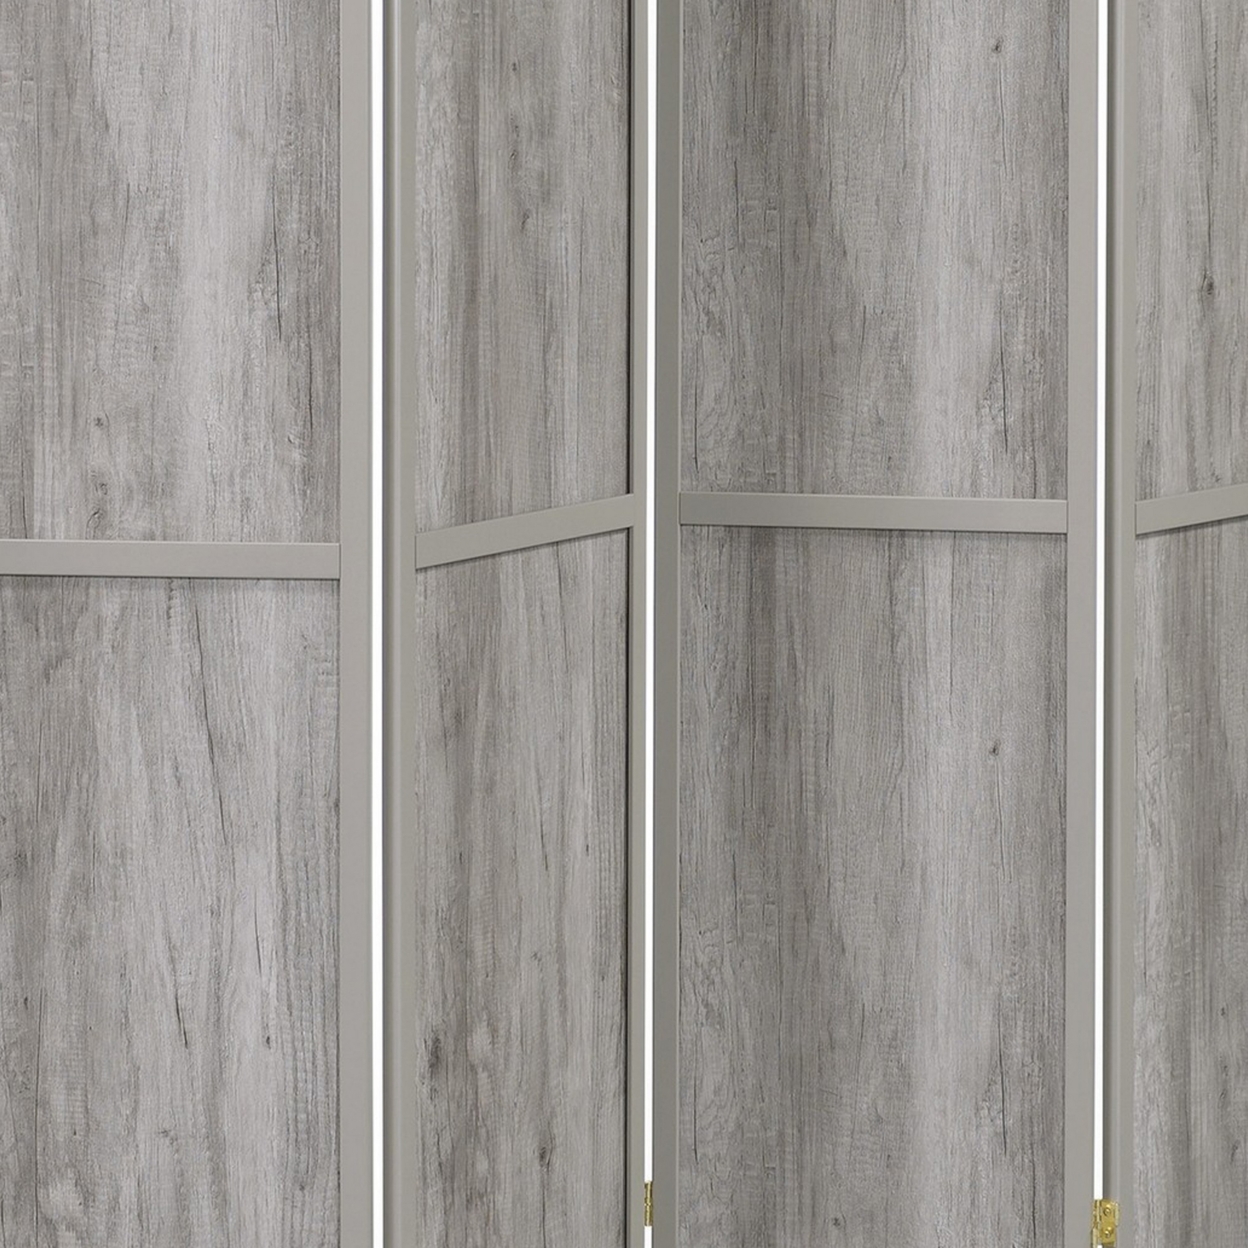 70 Inch Modern 4 Panel Folding Screen Room Divider, Rustic Gray Wood Finish